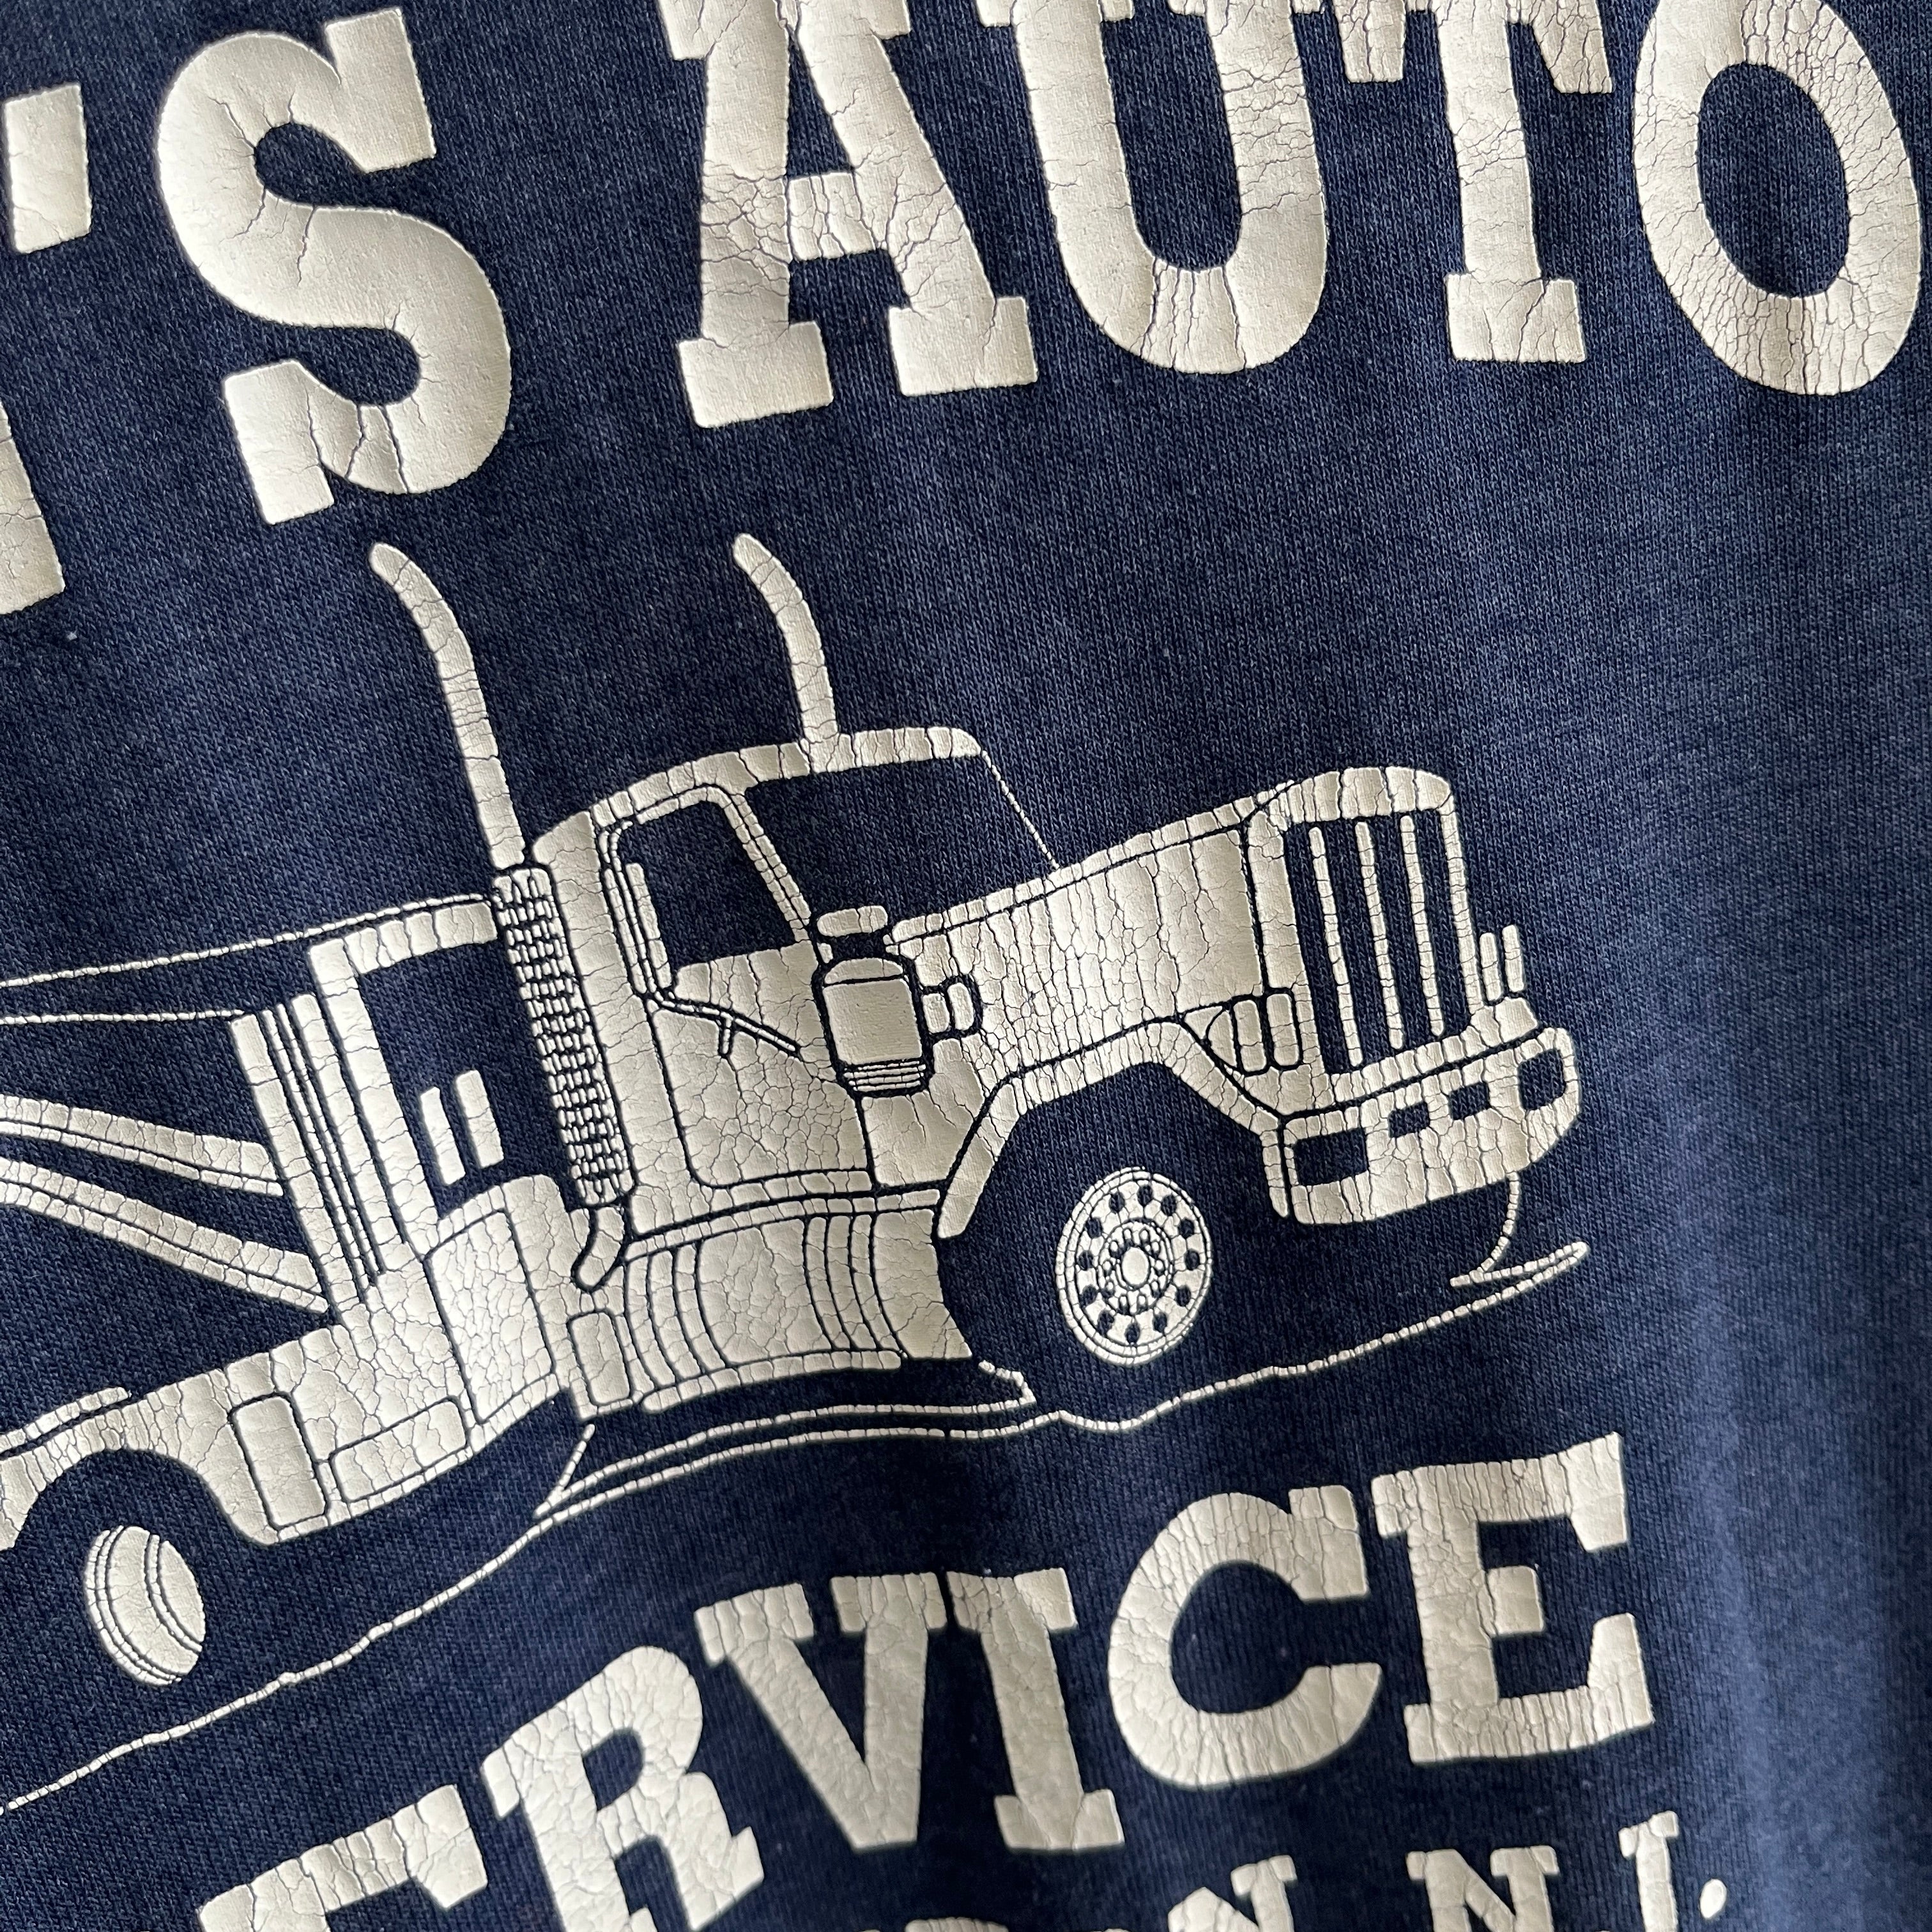 1990s John's Auto Service - Barrington, New Jersey - T-Shirt